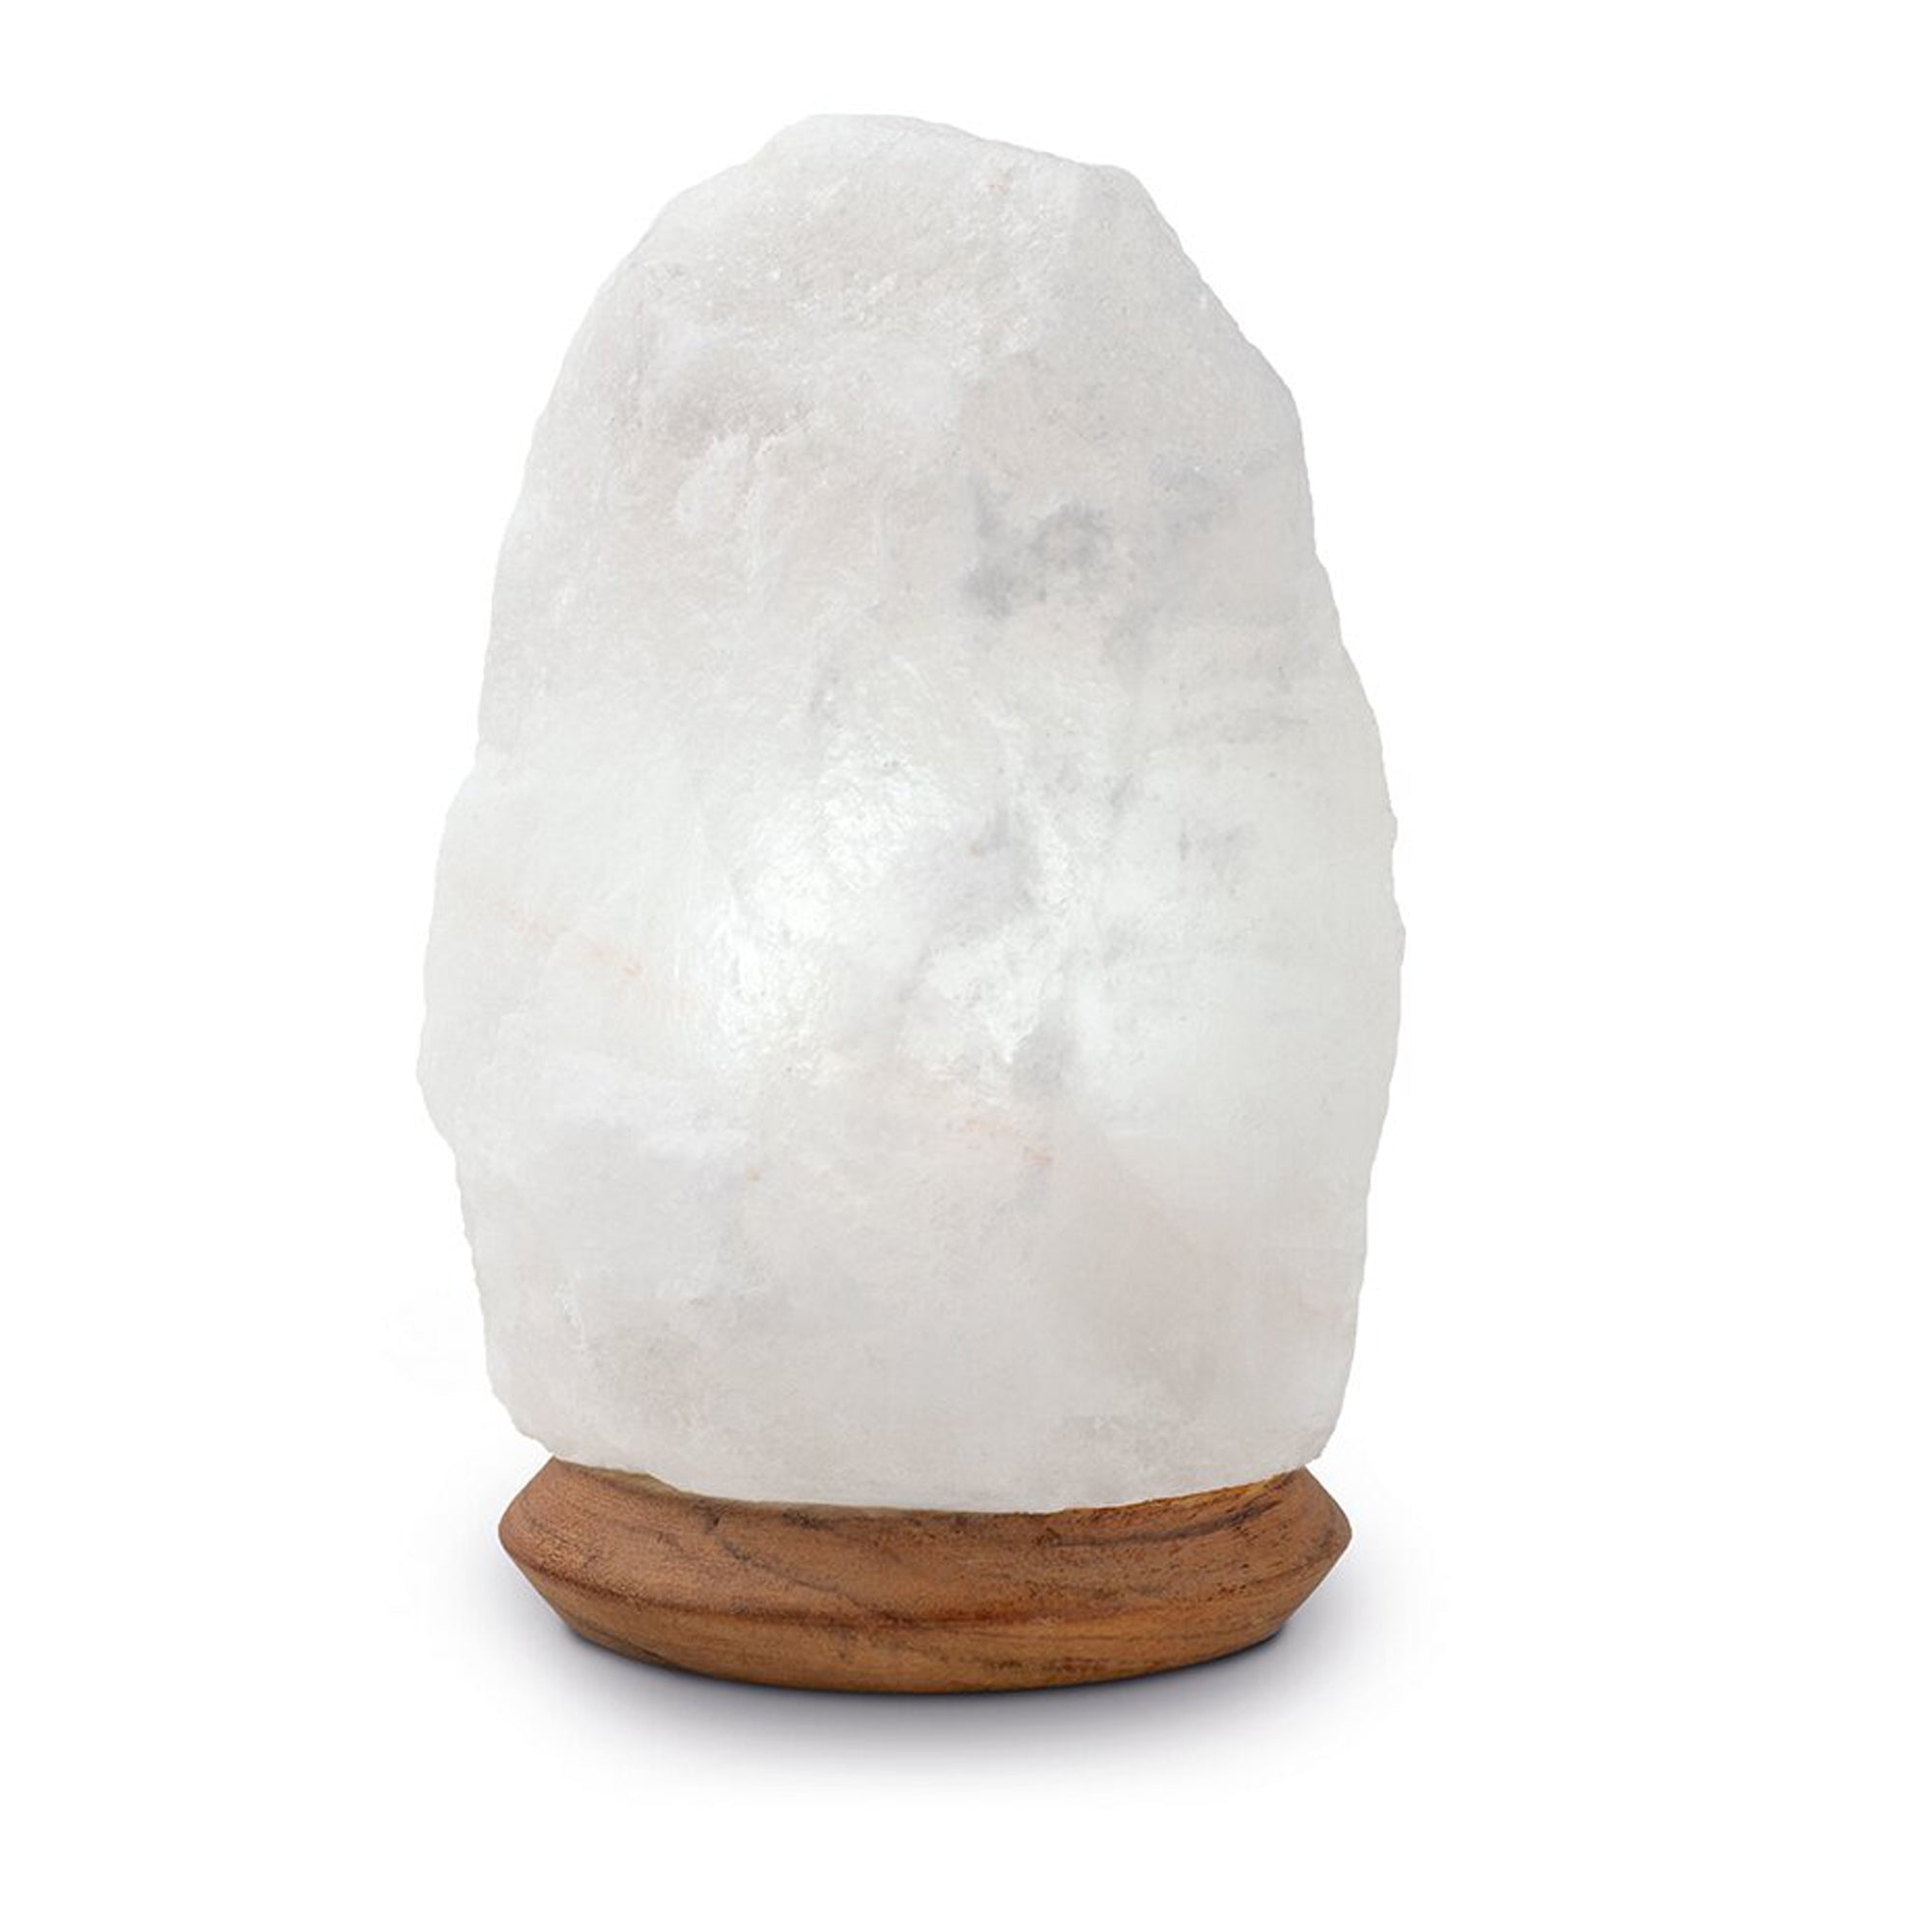 Salzkristall Rock, White Line, mit Holzsockel, - BEPANO